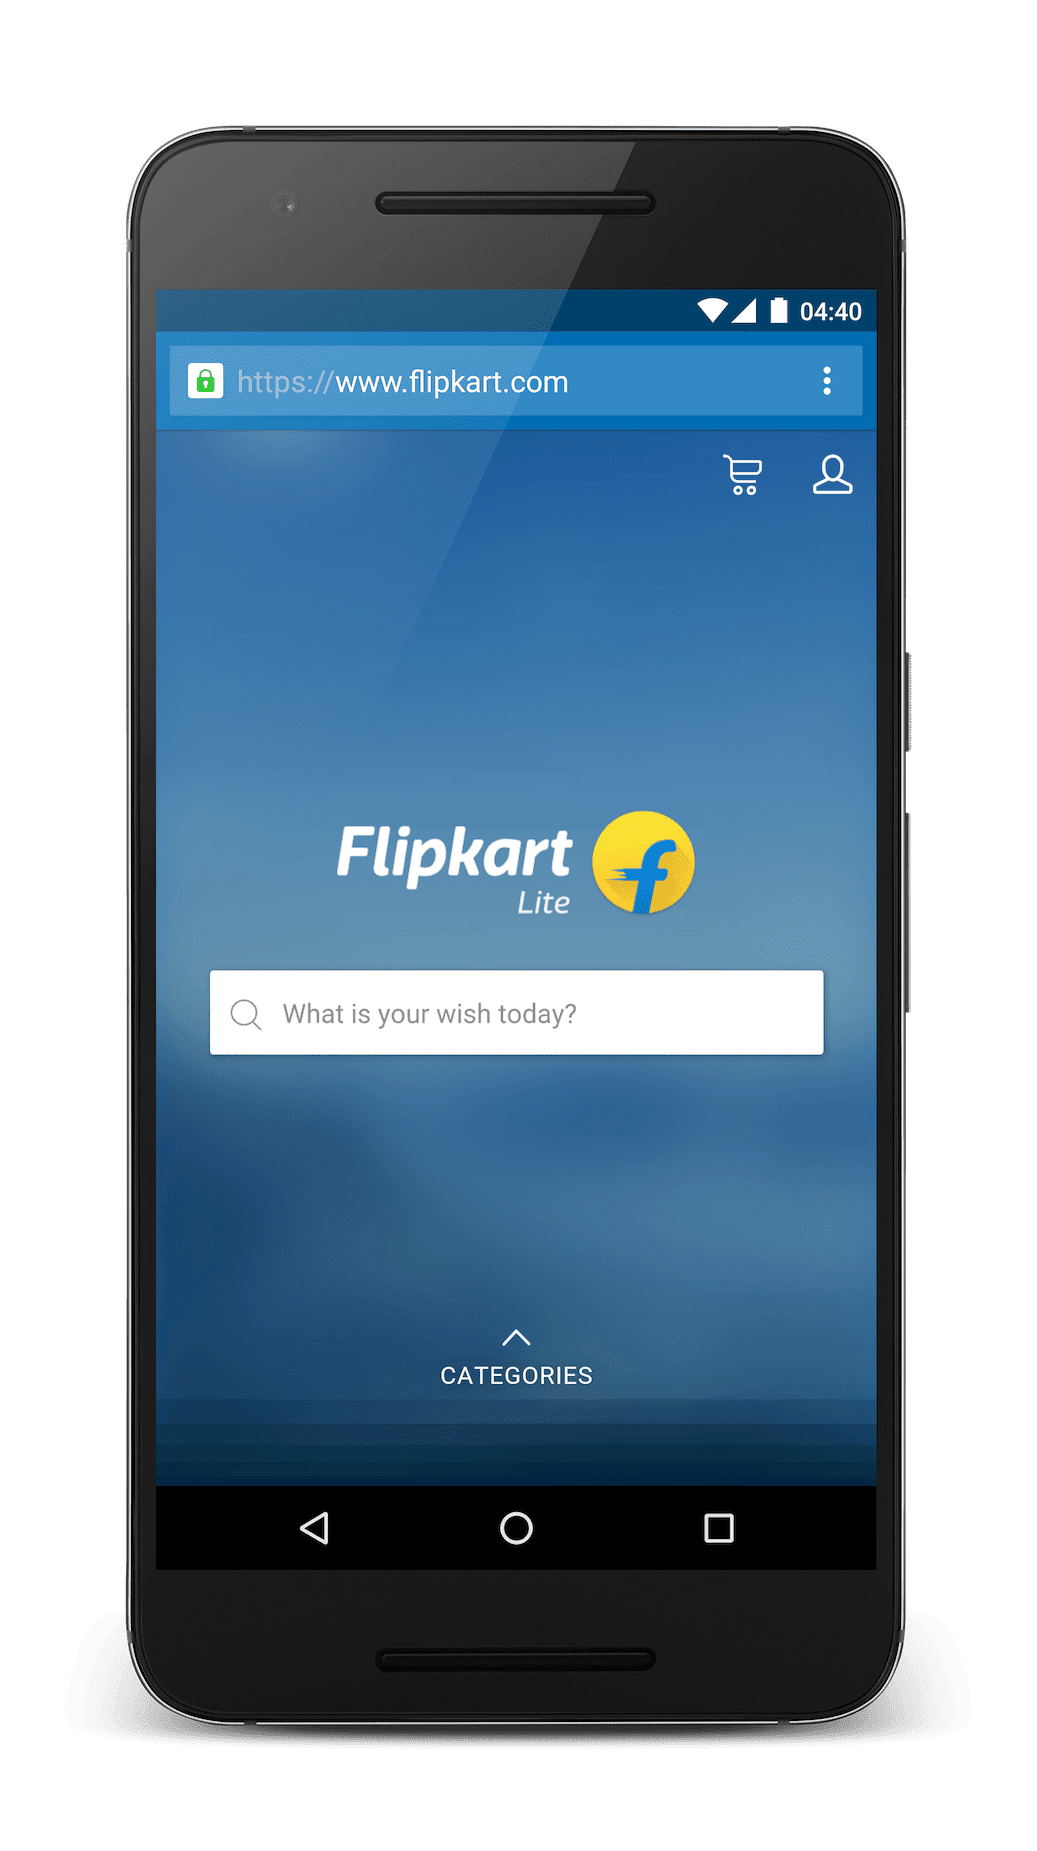 אתר Flipkart